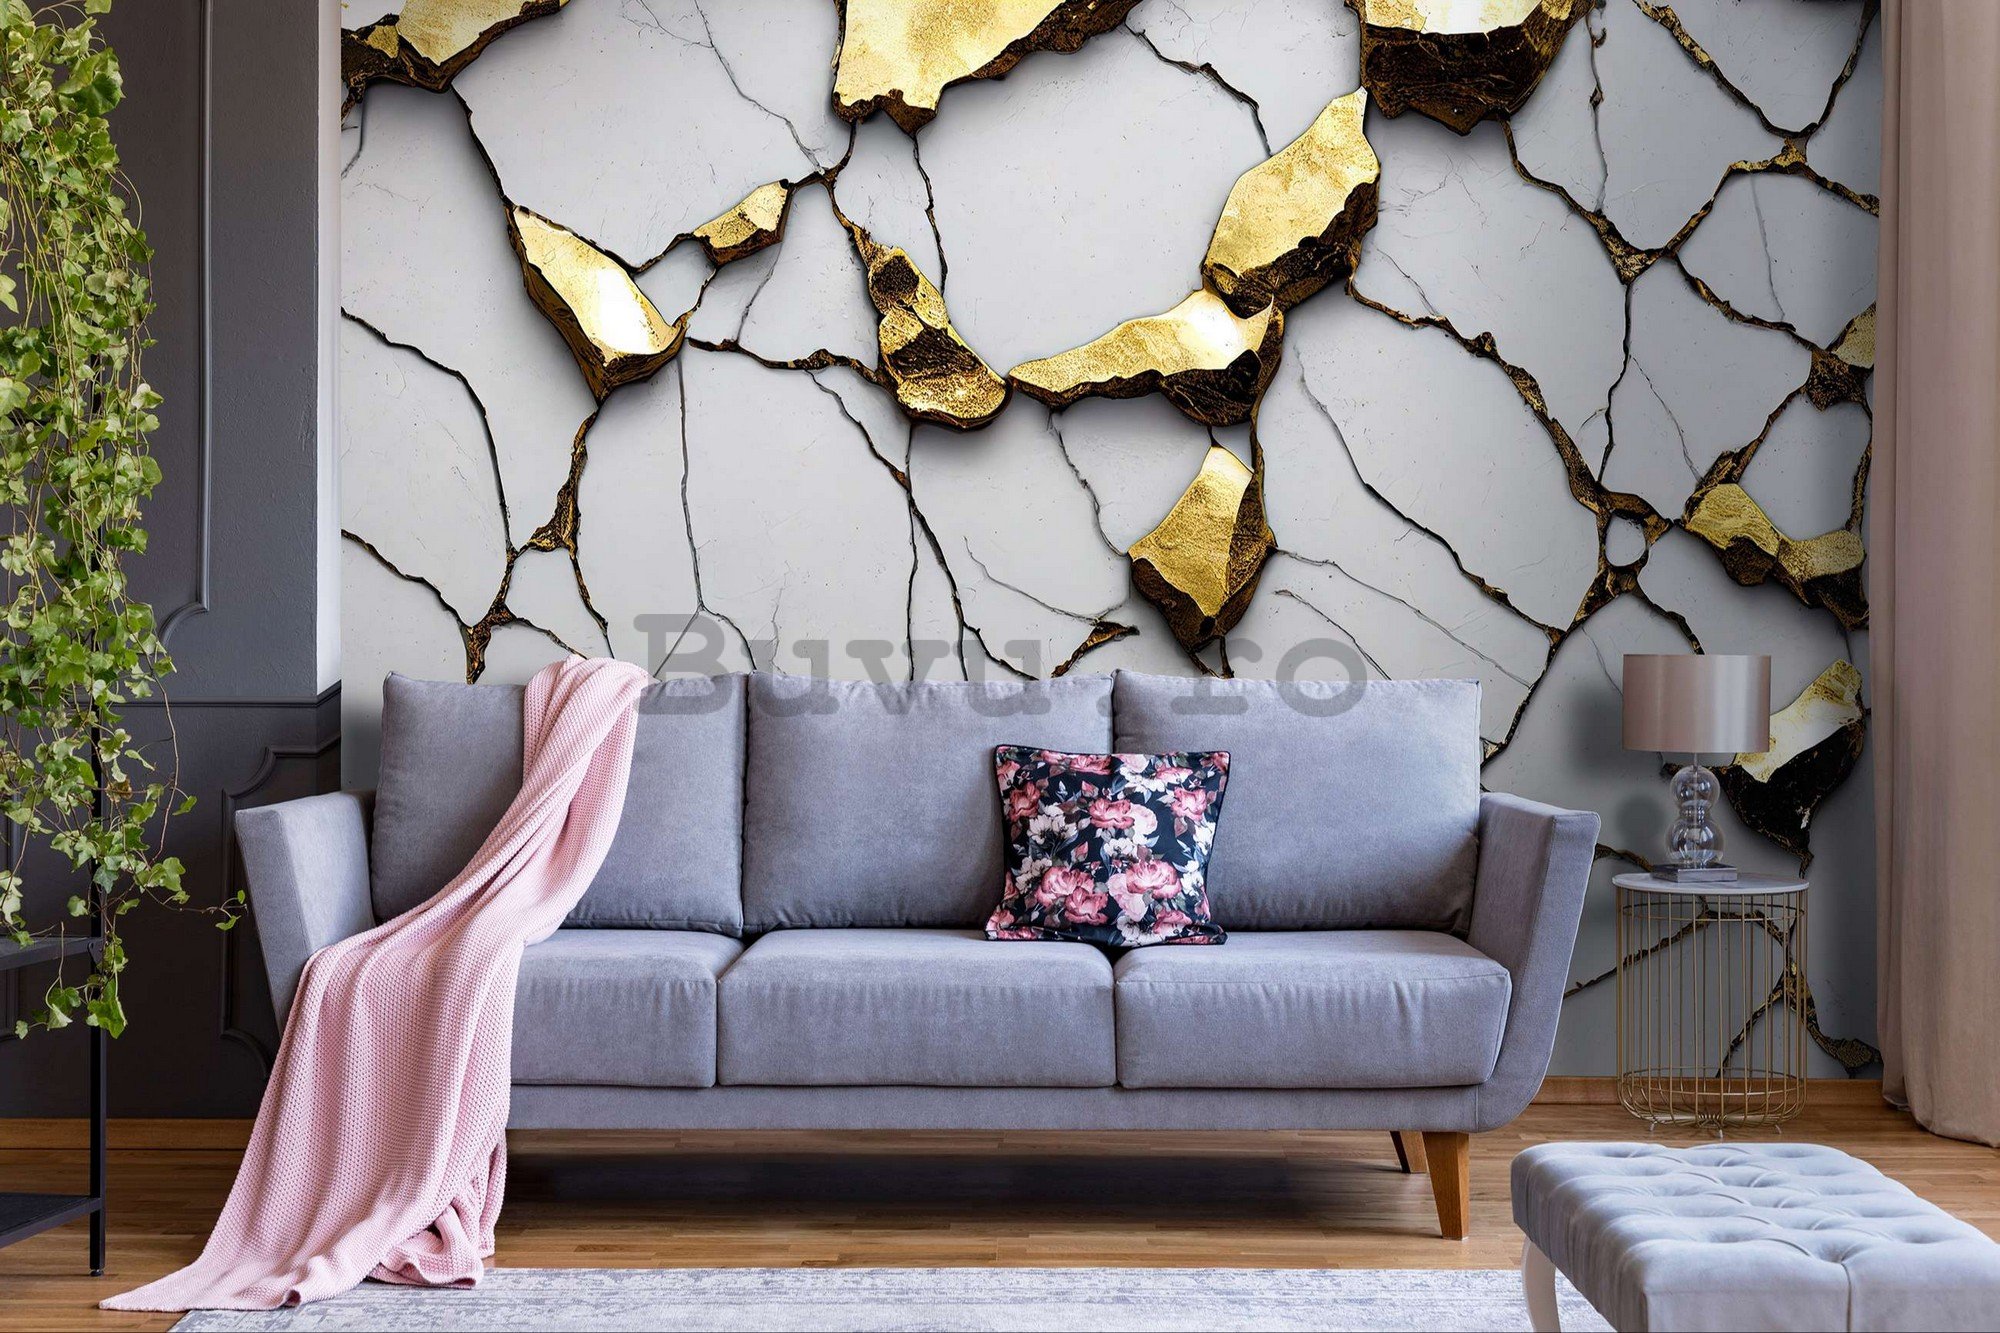 Fototapet vlies: Imitație glamour de marmură aurie cu un perete alb - 416x254 cm